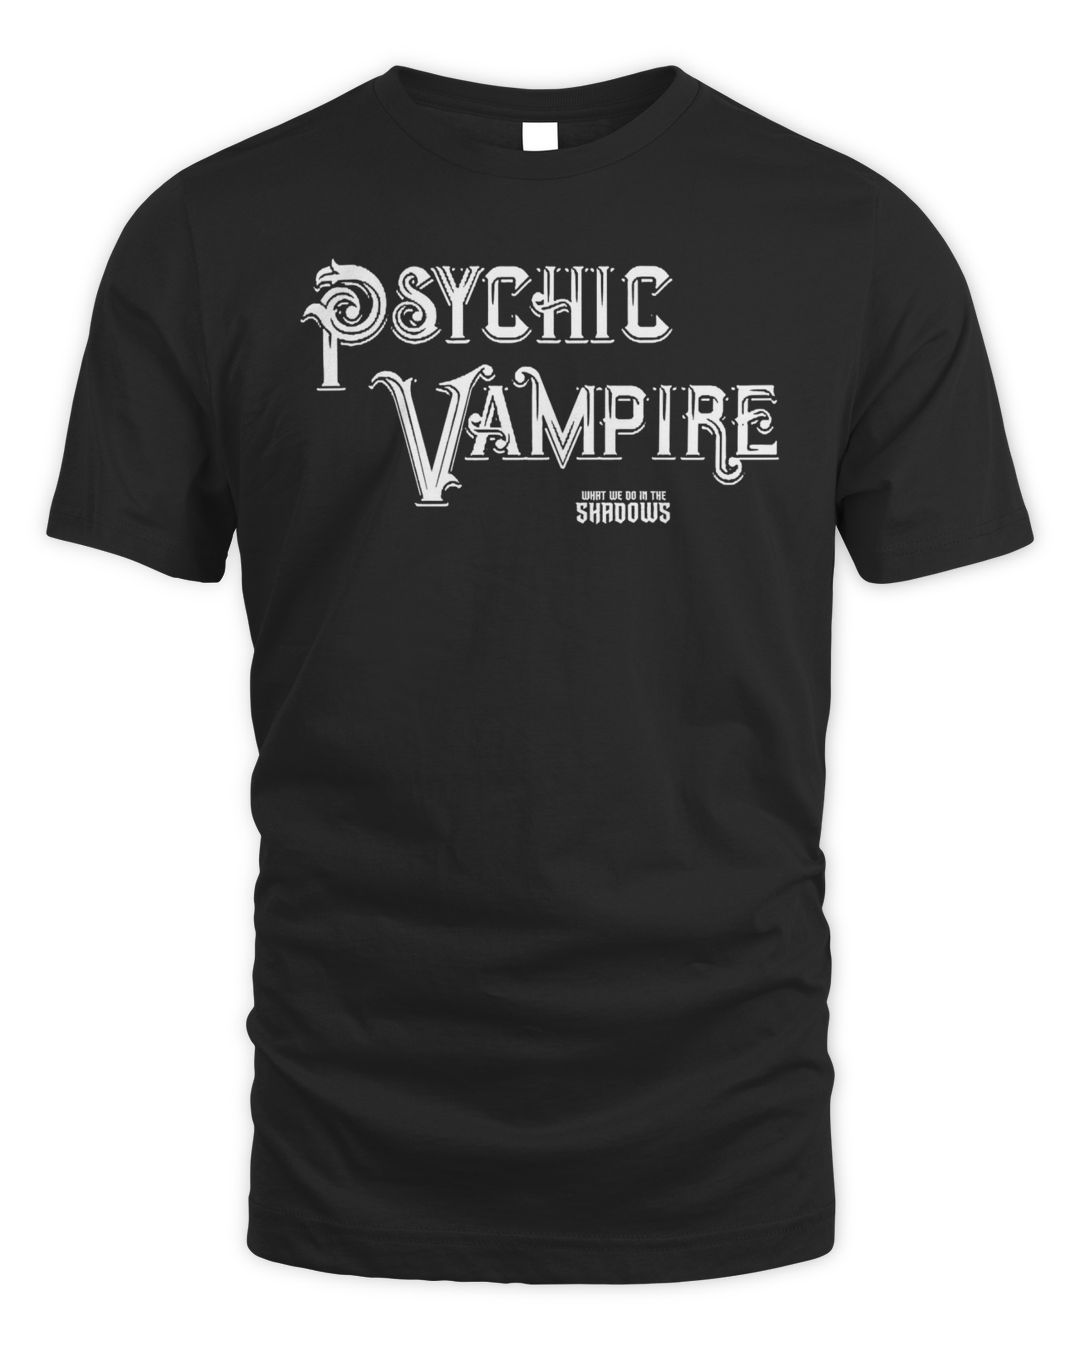 What We Do In The Shadows Merch Psychic Vampire Shirt